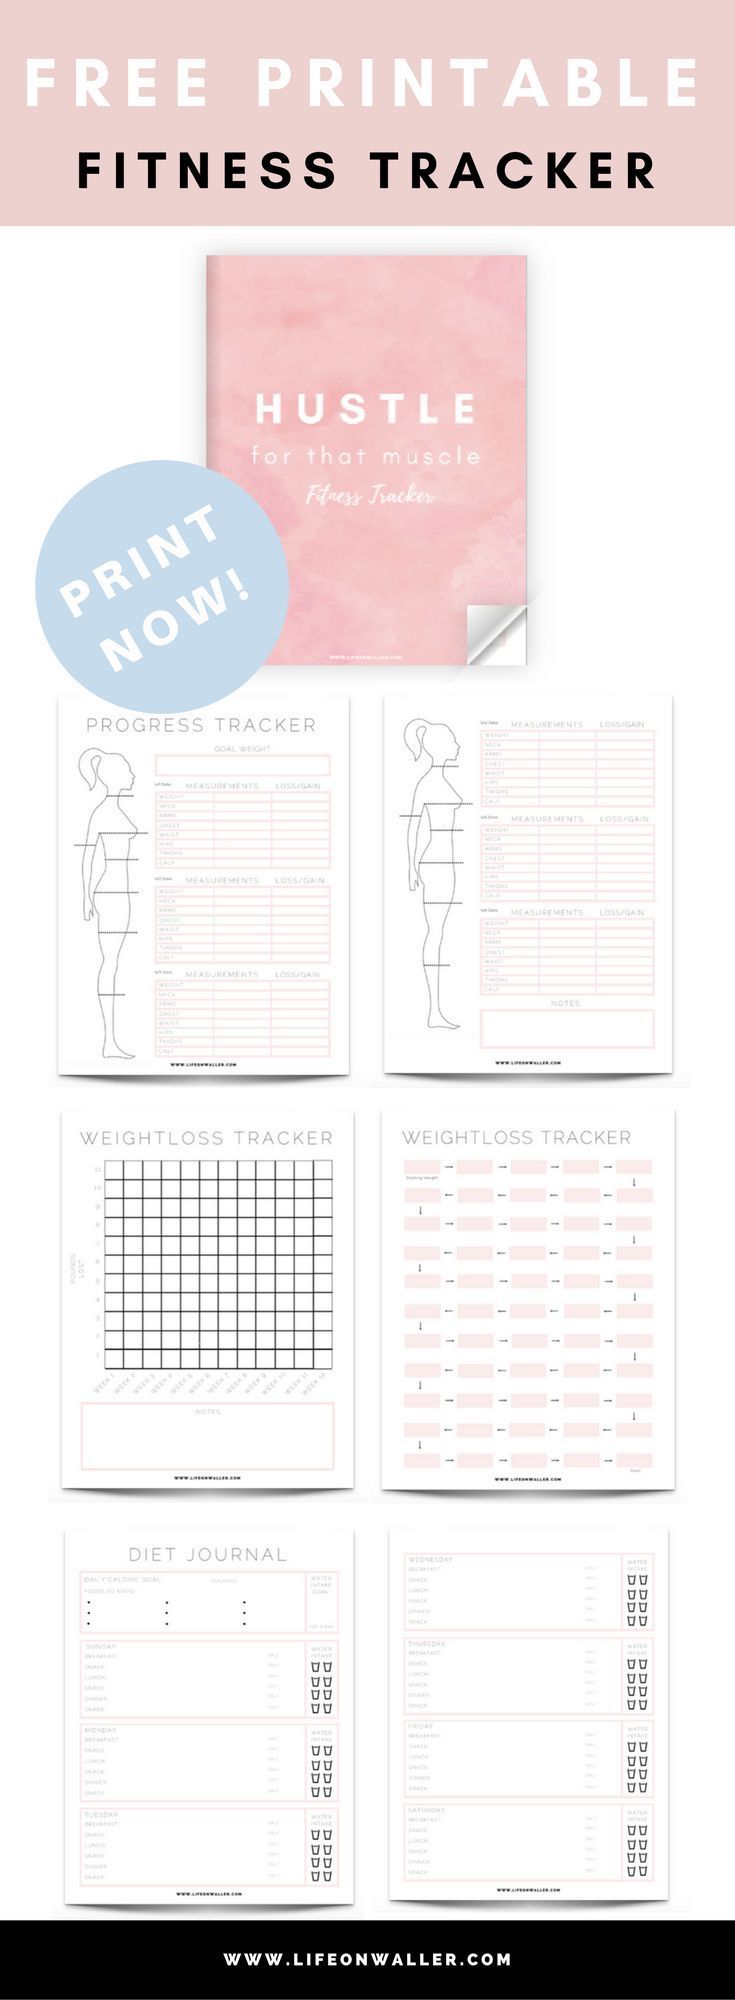 Free Printable Fitness Tracker -   23 fitness journal shape
 ideas